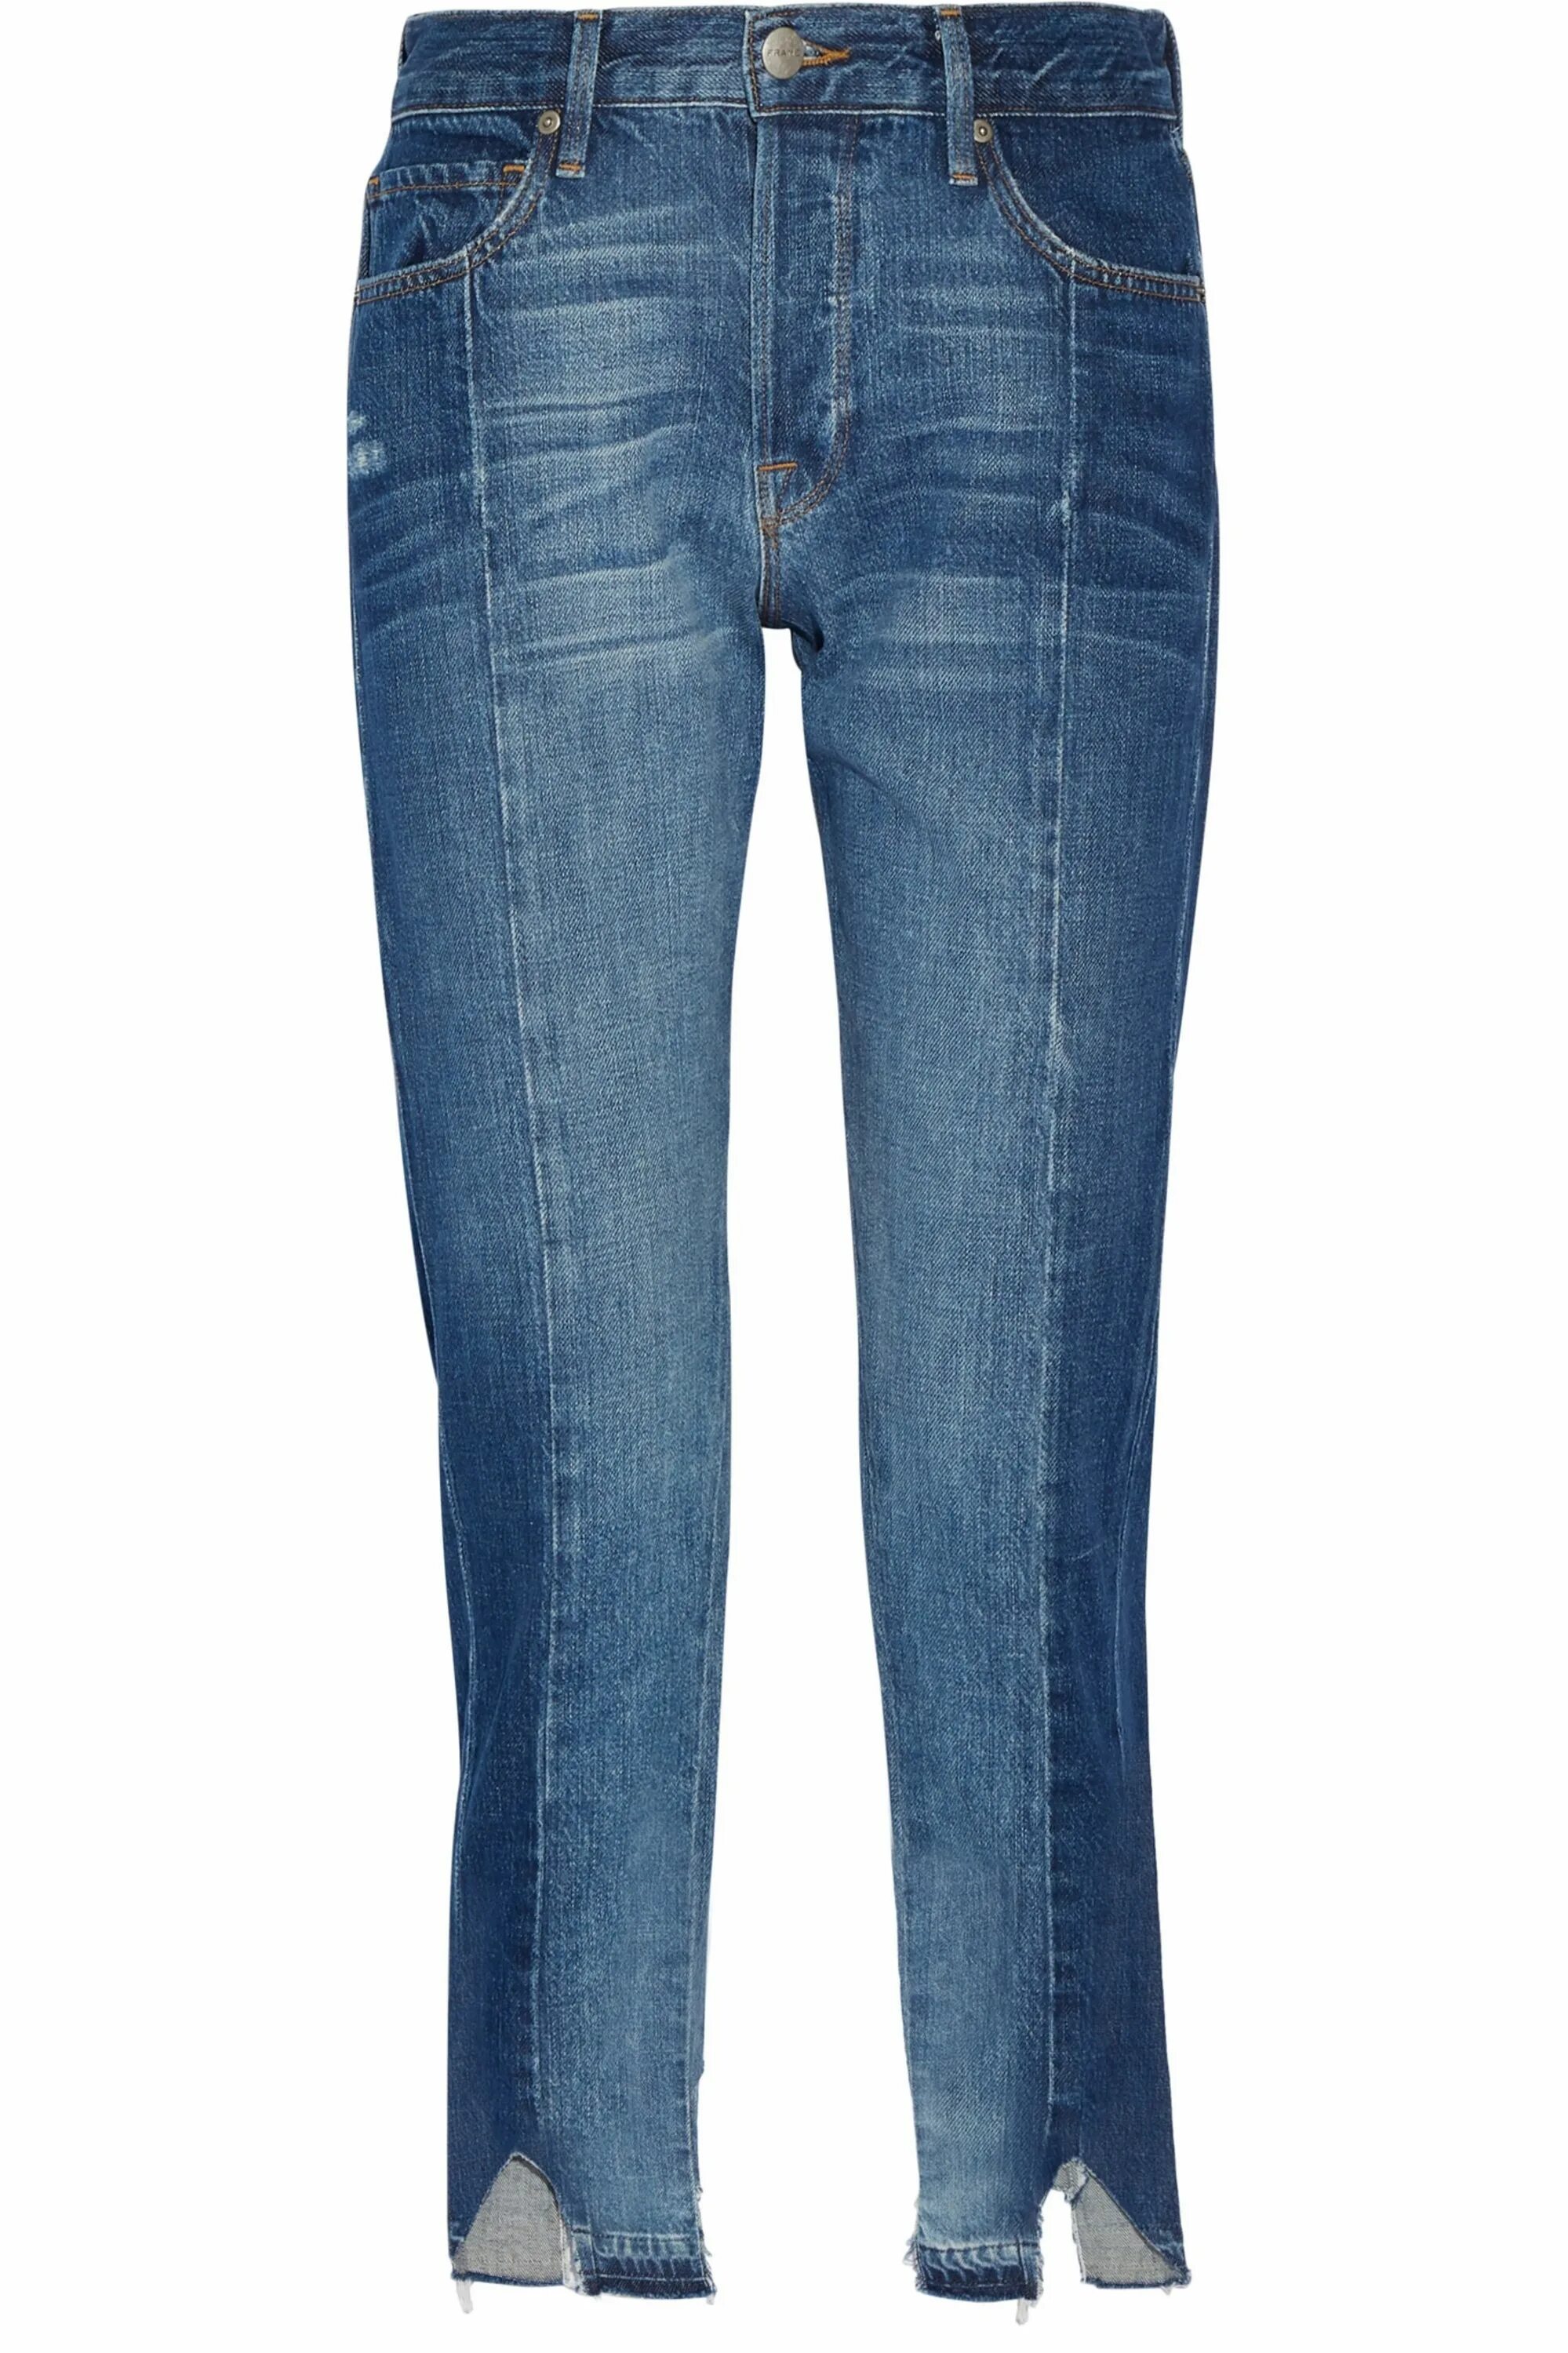 Mixed jeans. Djeans. Джинсы 180 см. Джинсы Mavi Nicole Mid-Rise skinny. Наклёпка Classic Djeans.